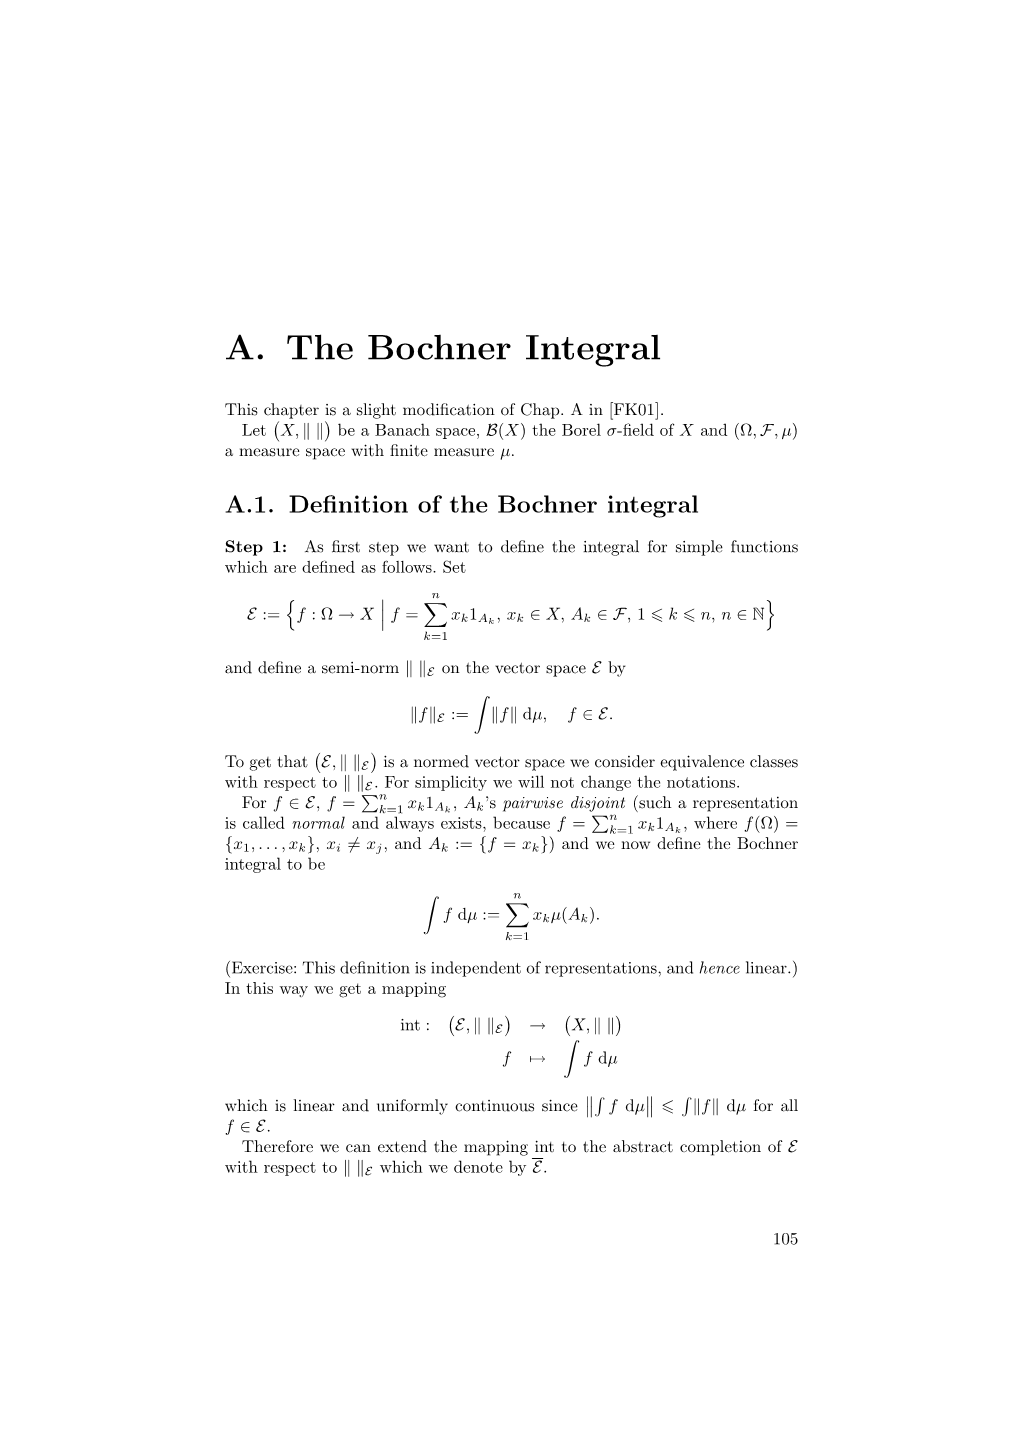 A. the Bochner Integral